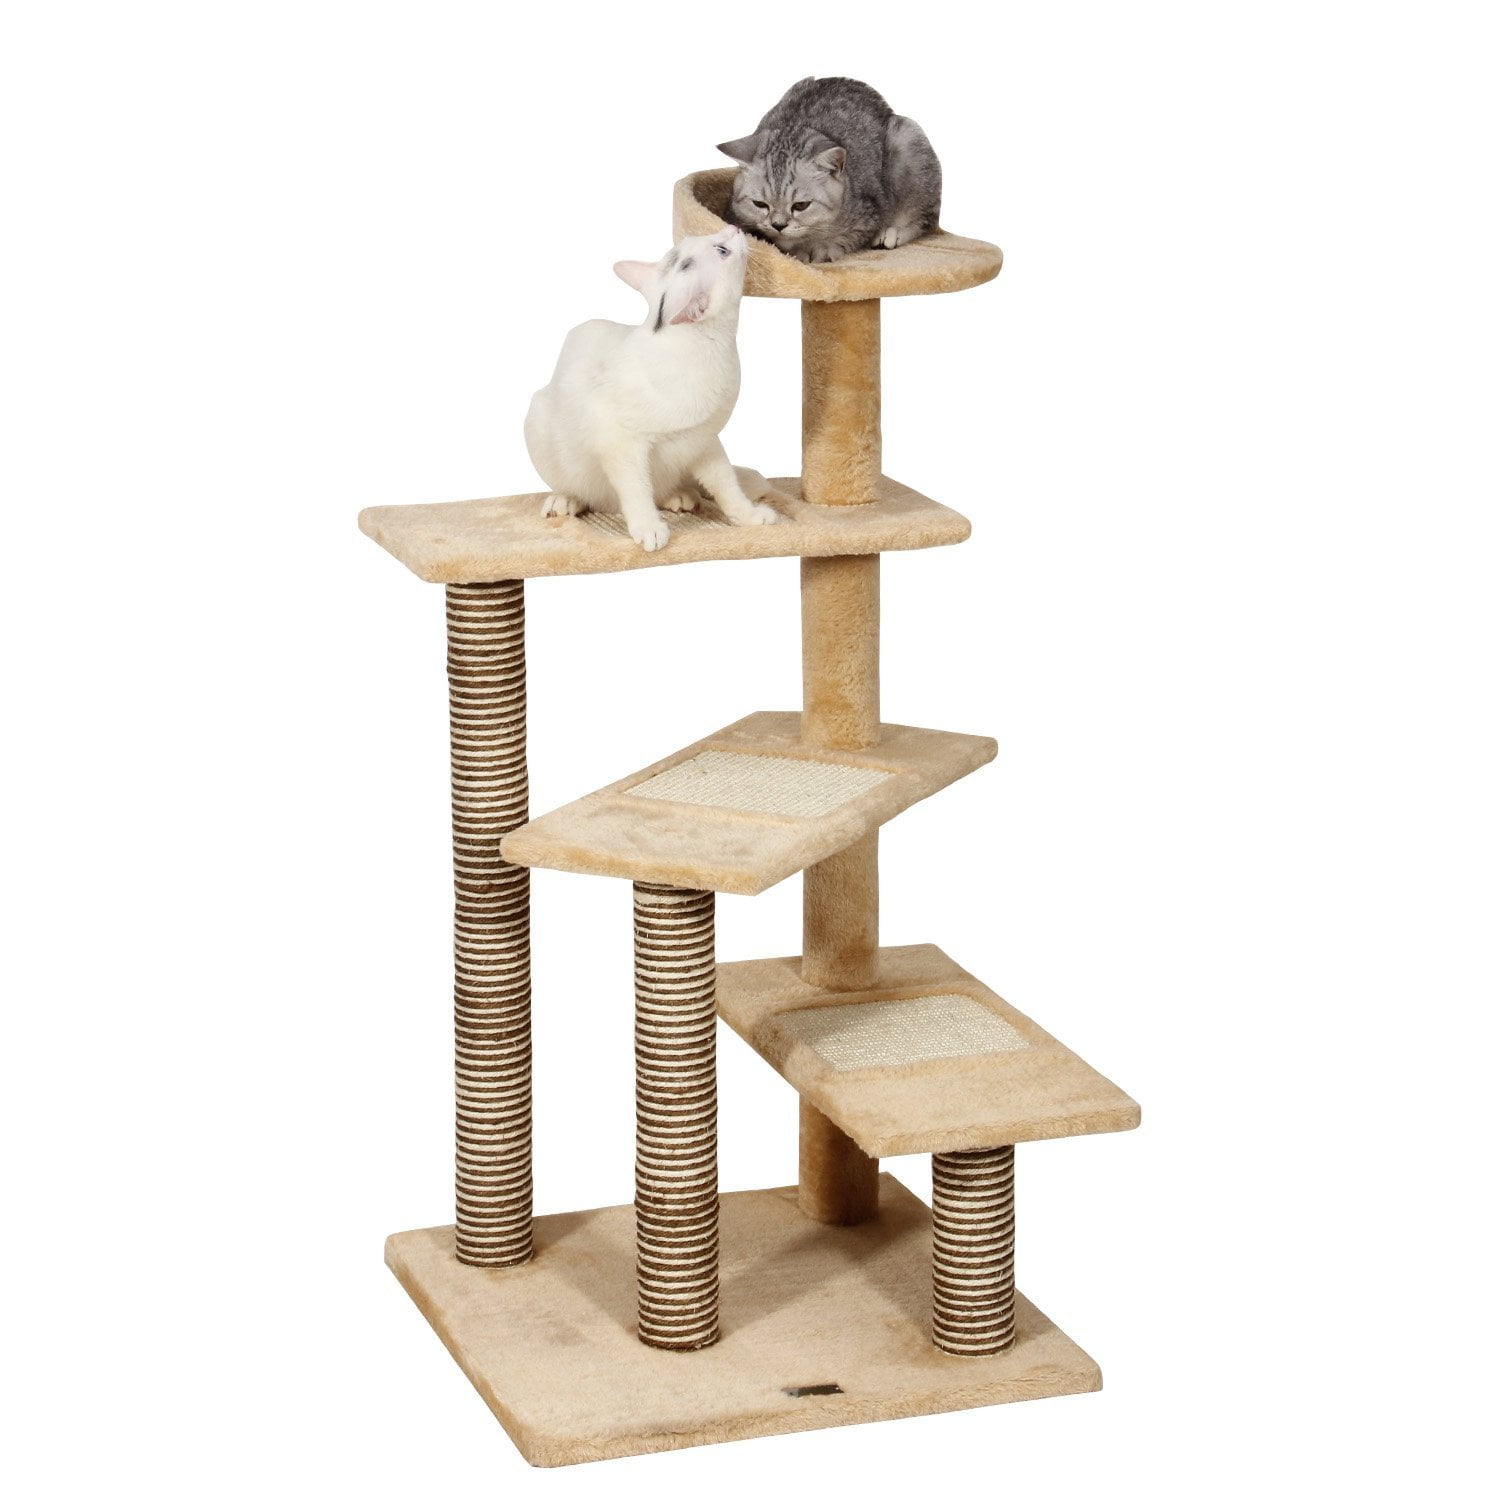 Ollieroo 40" H MultiLevel Kitten Cat Tree Furniture Climber Rope